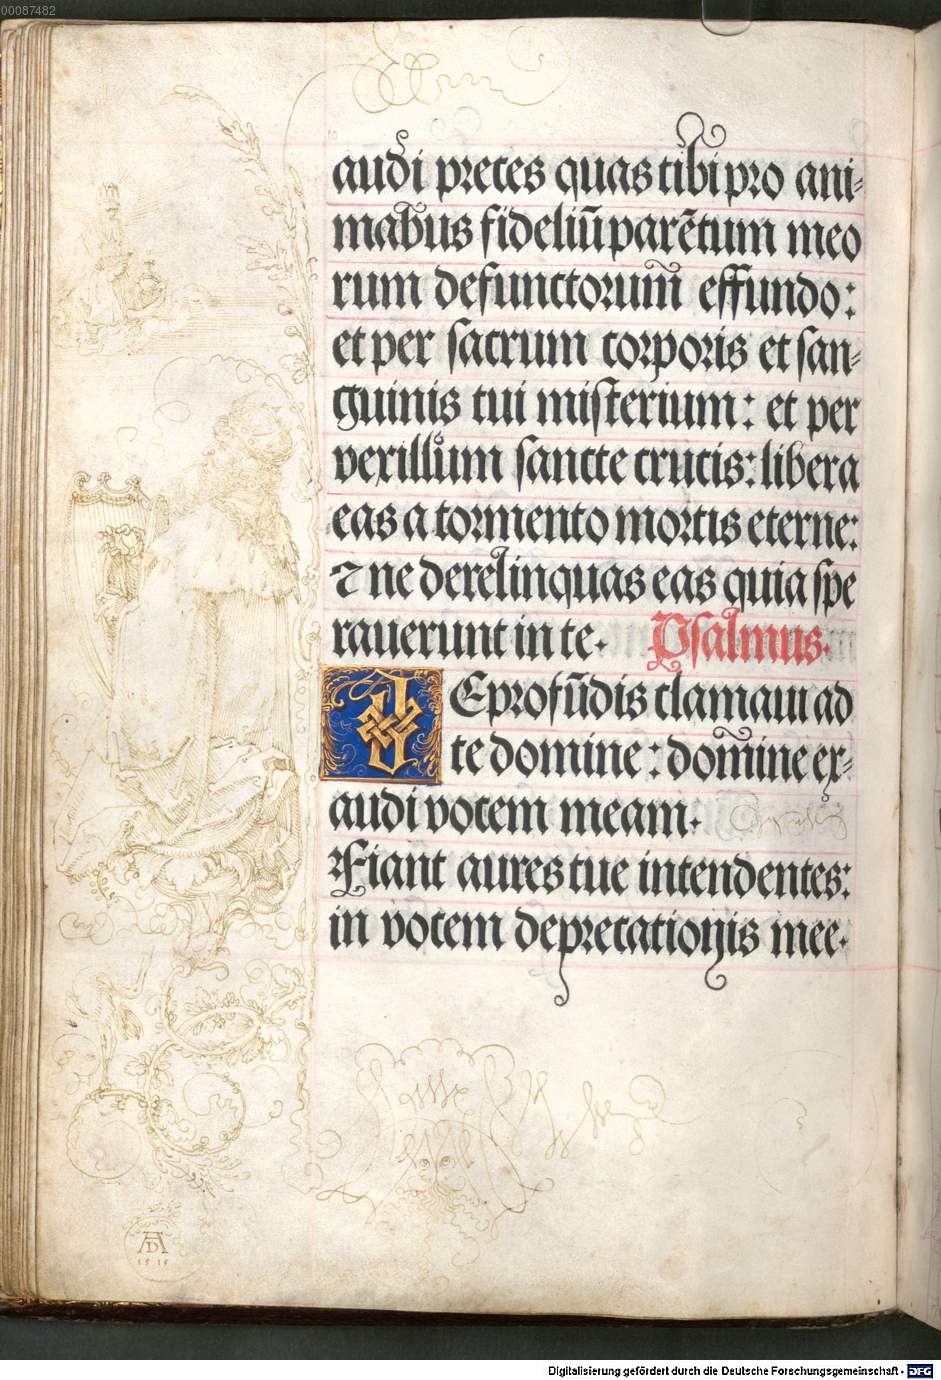 1515 Durer Vision David Livre de prieres de l'Empereur Maximilien I, Munich, Bayerische Staatsbibliothek, 2 L.impr.membr. 64, fol. 16v